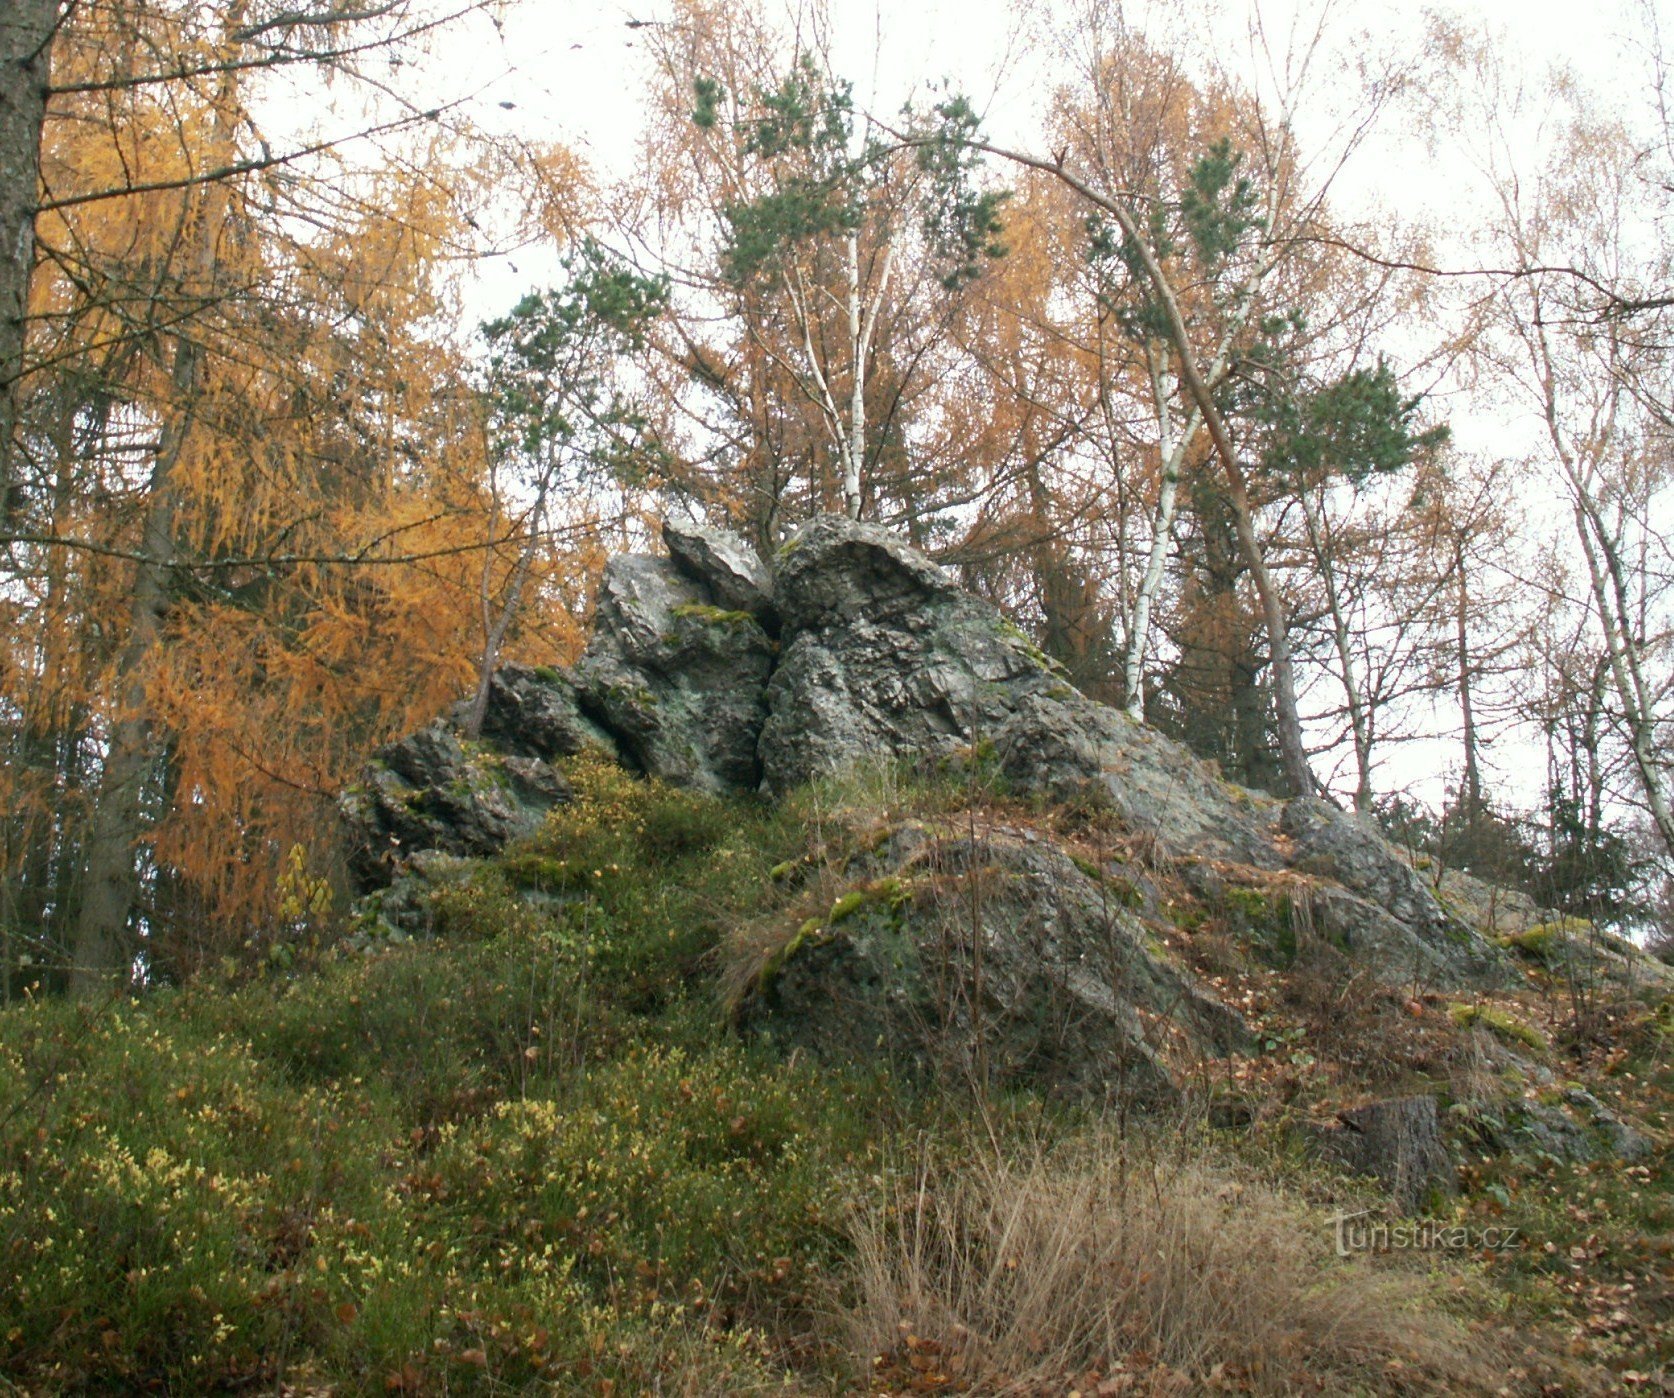 Göeth's Rocks